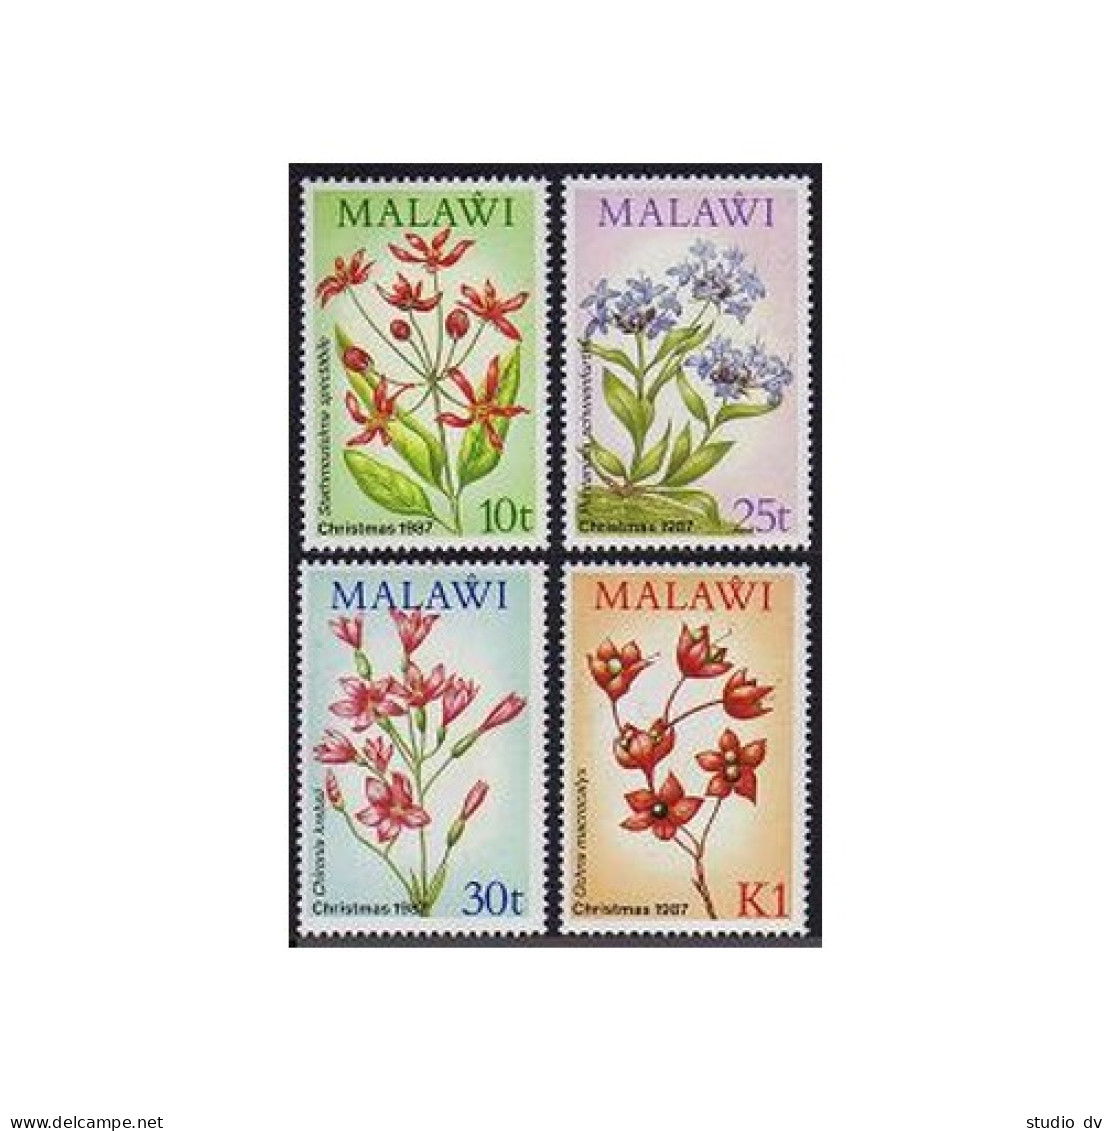 Malawi 506-509, MNH. Michel 489-492. Christmas 1987, Wild Flowers. - Malawi (1964-...)